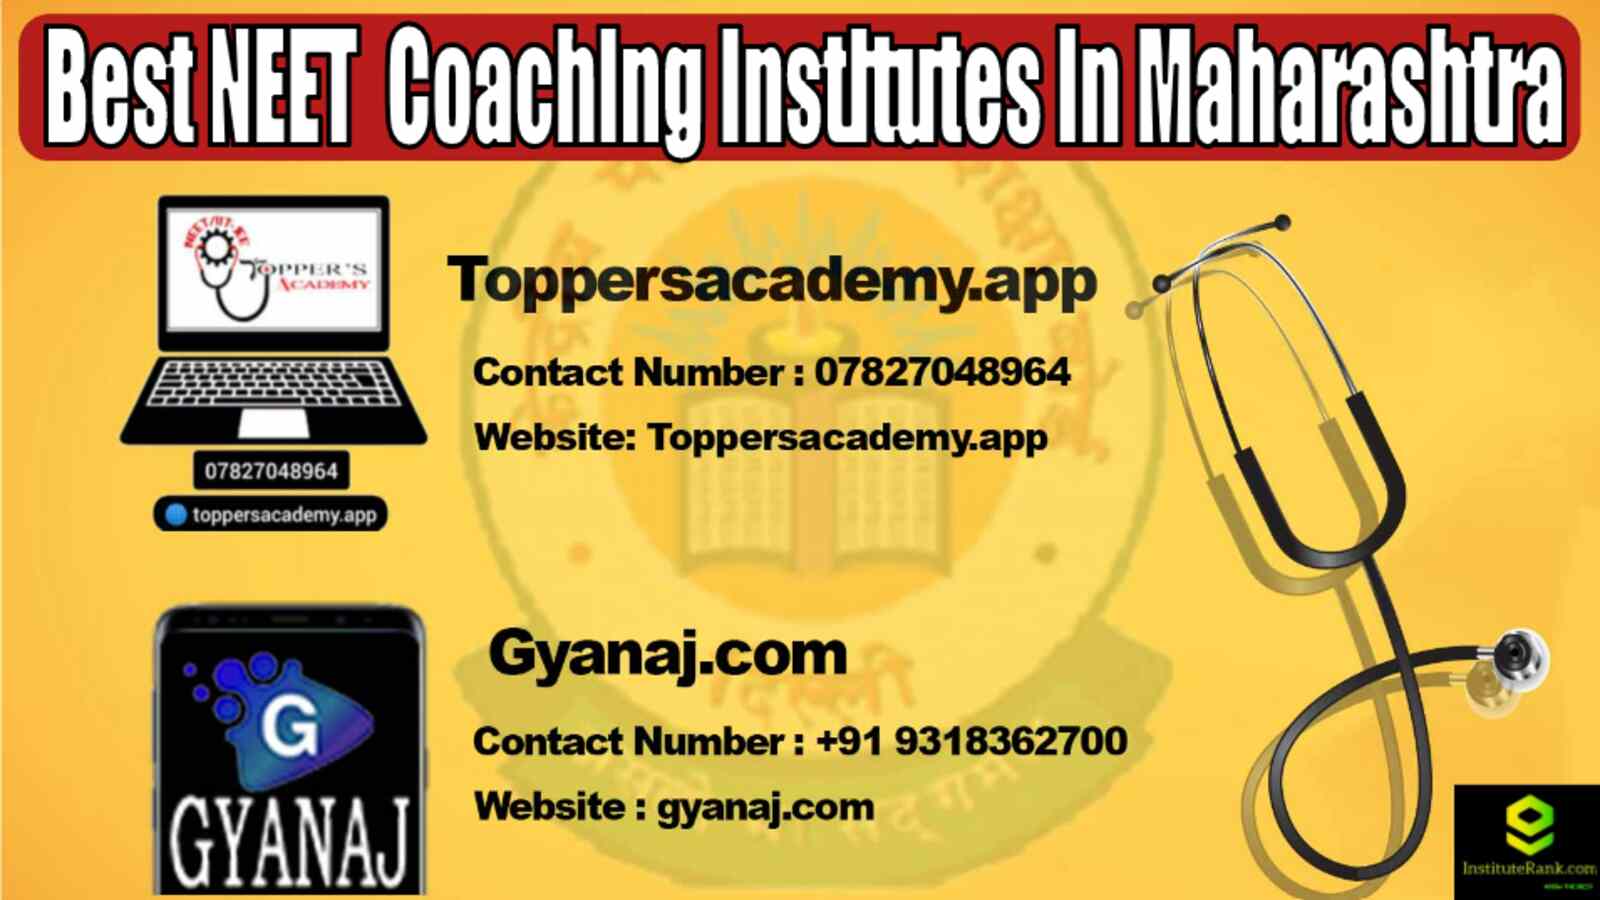 Best Coaching Institutes in Maharashtra for NEET (1)